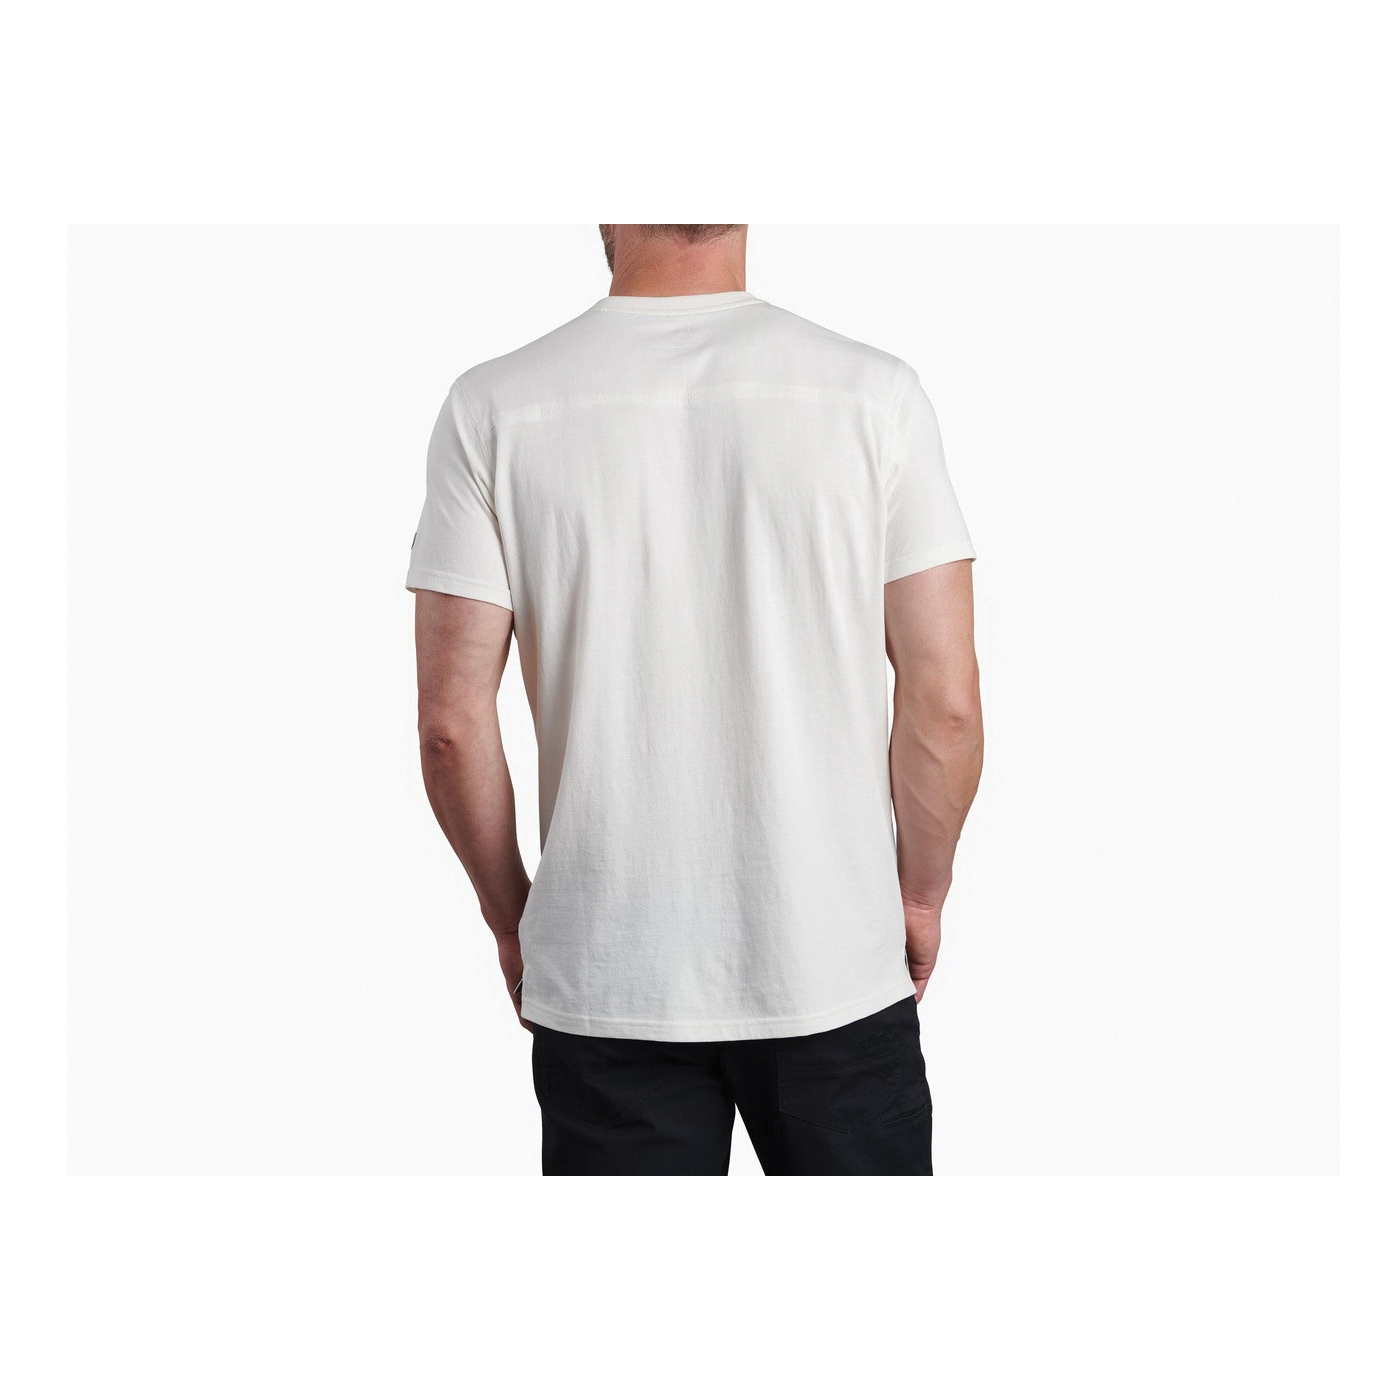 KUHL MOUNTAIN LINES Series 7397-WH-M T-Shirt, M, Cotton, White, KUHL Graphic Print/Pattern, Short Sleeve, Klassik Fit - 2